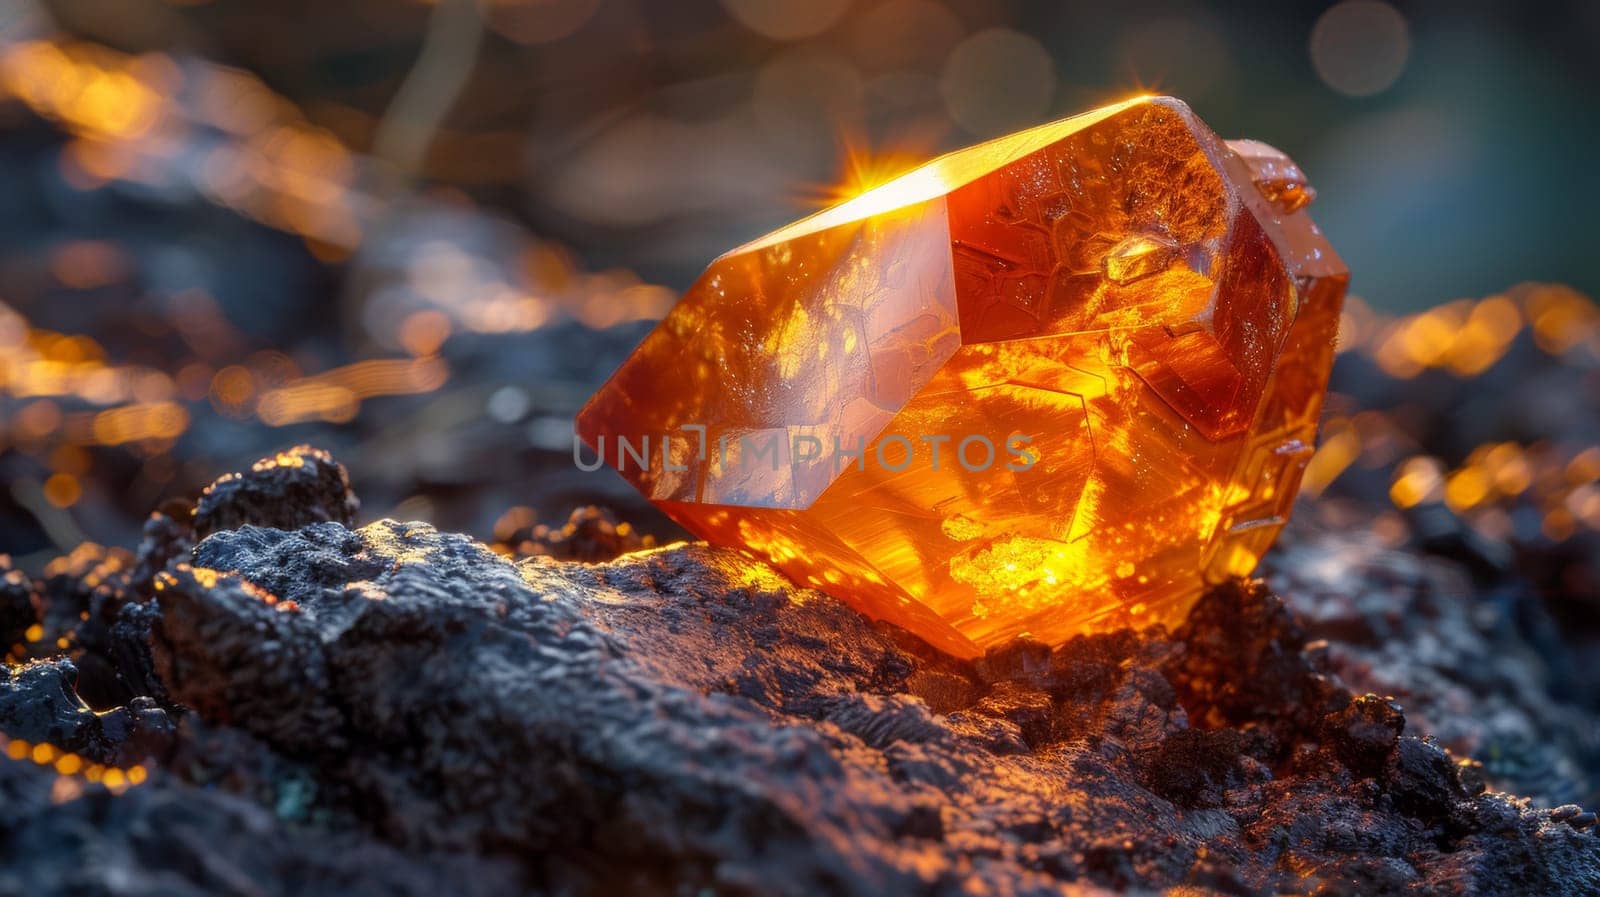 A large orange rock sitting on top of some rocks